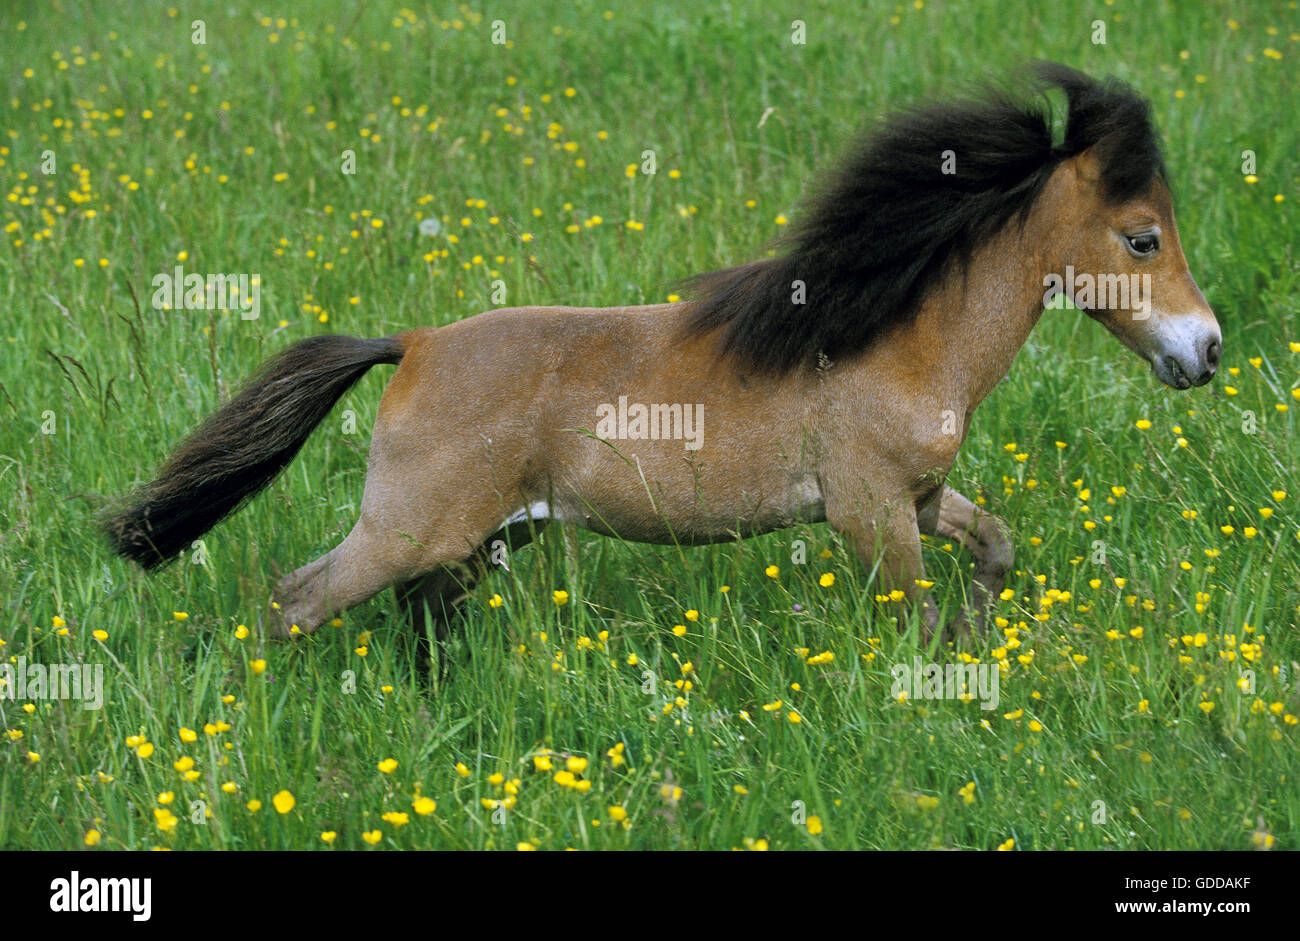 Miniature) Shetland pony  a very special horse breed